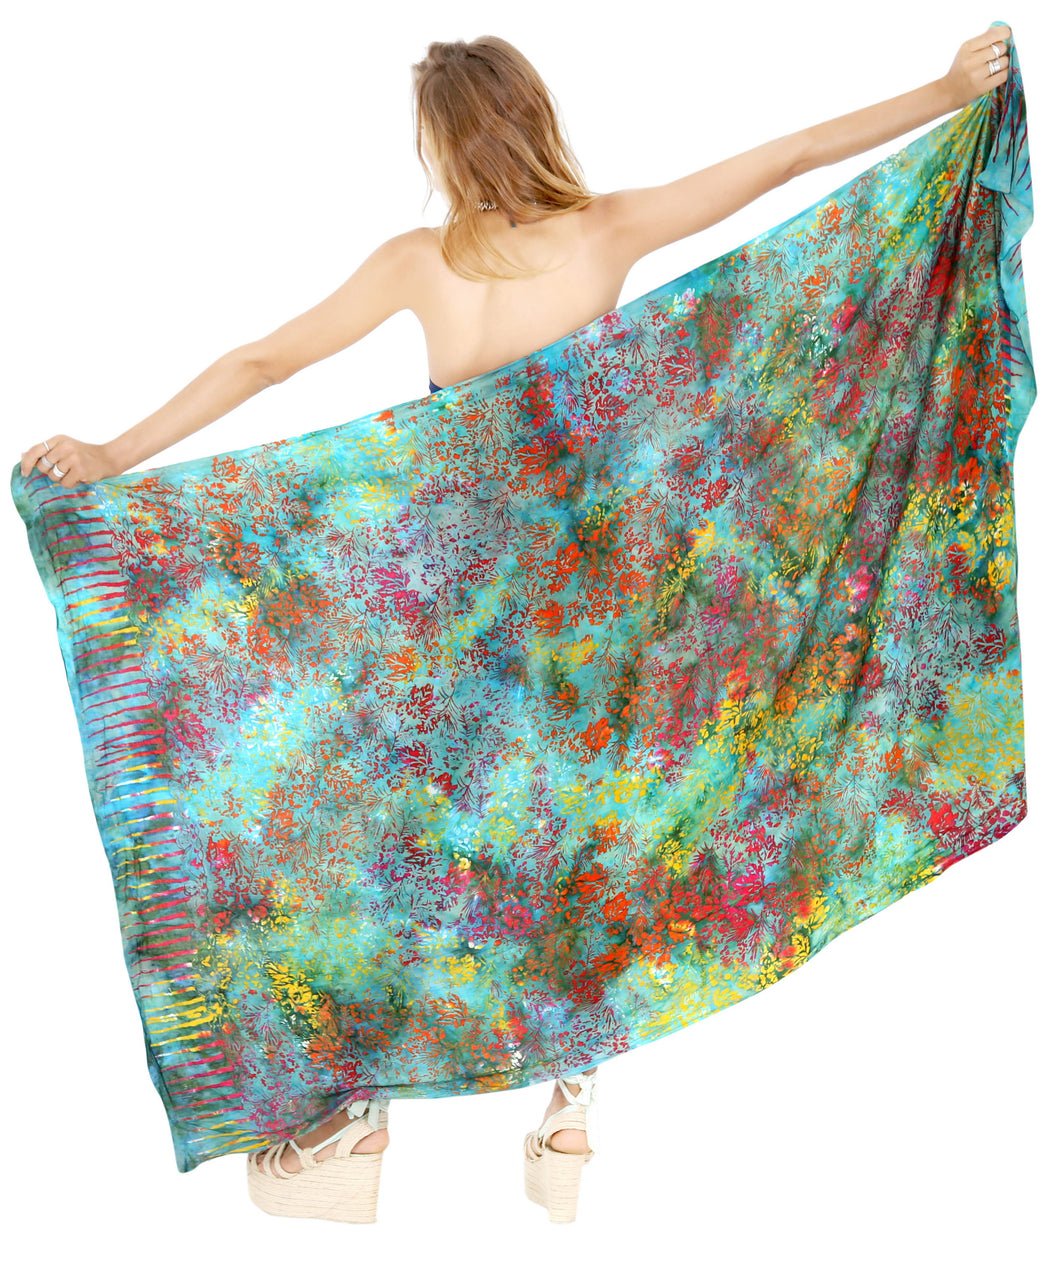 la-leela-resort-scarf-beach-dress-sarong-printed-78x43-turquoise_4401